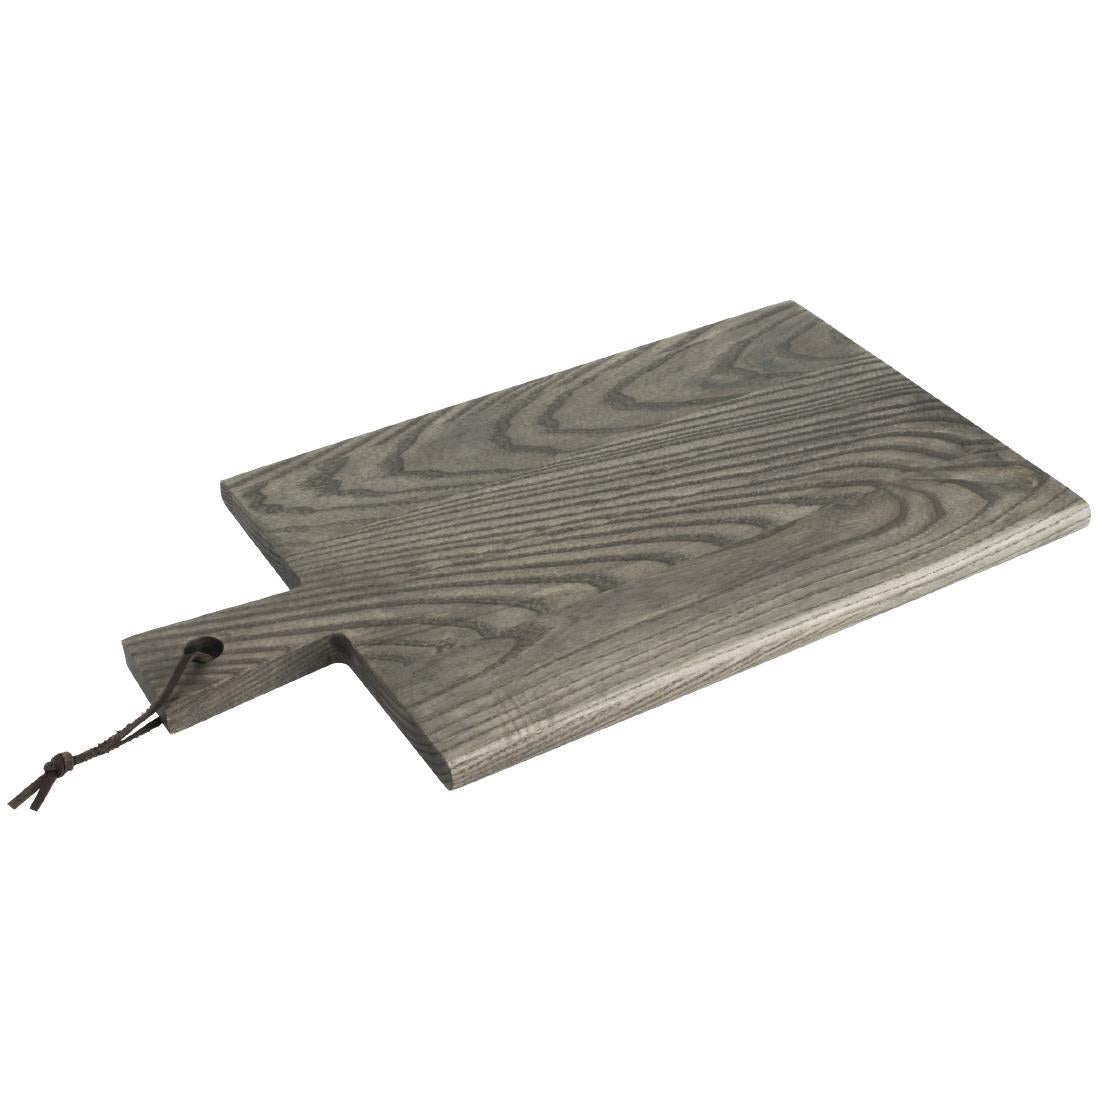 CN571 Olympia Ash Wood Handled Platter 440mm